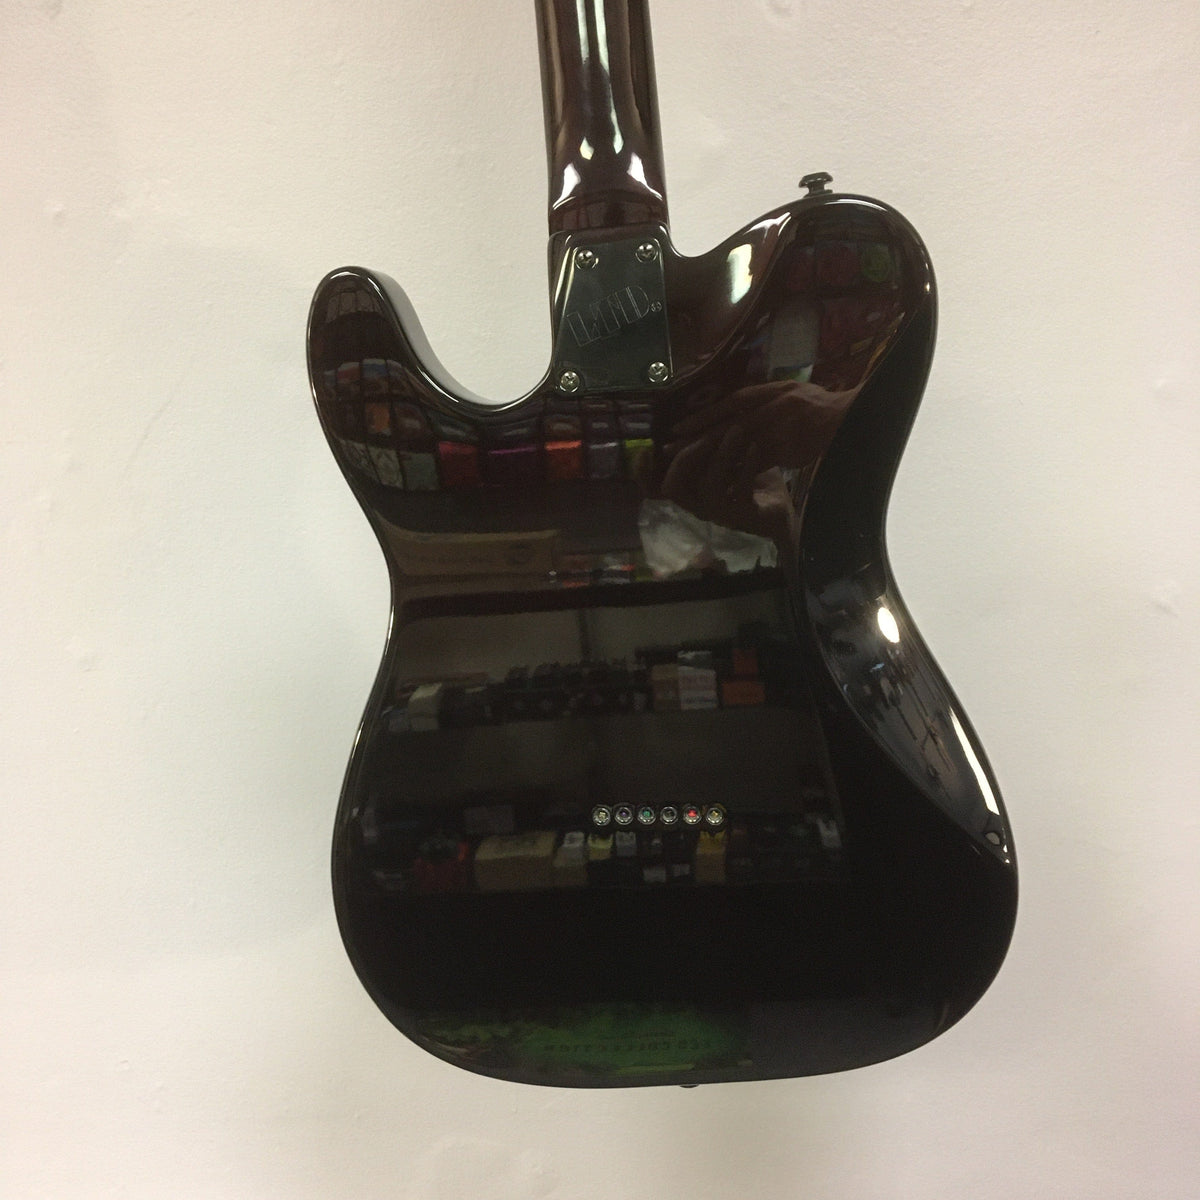 ESP LTD TE-200 Tobacco Sunburst Blem Guitars on Main